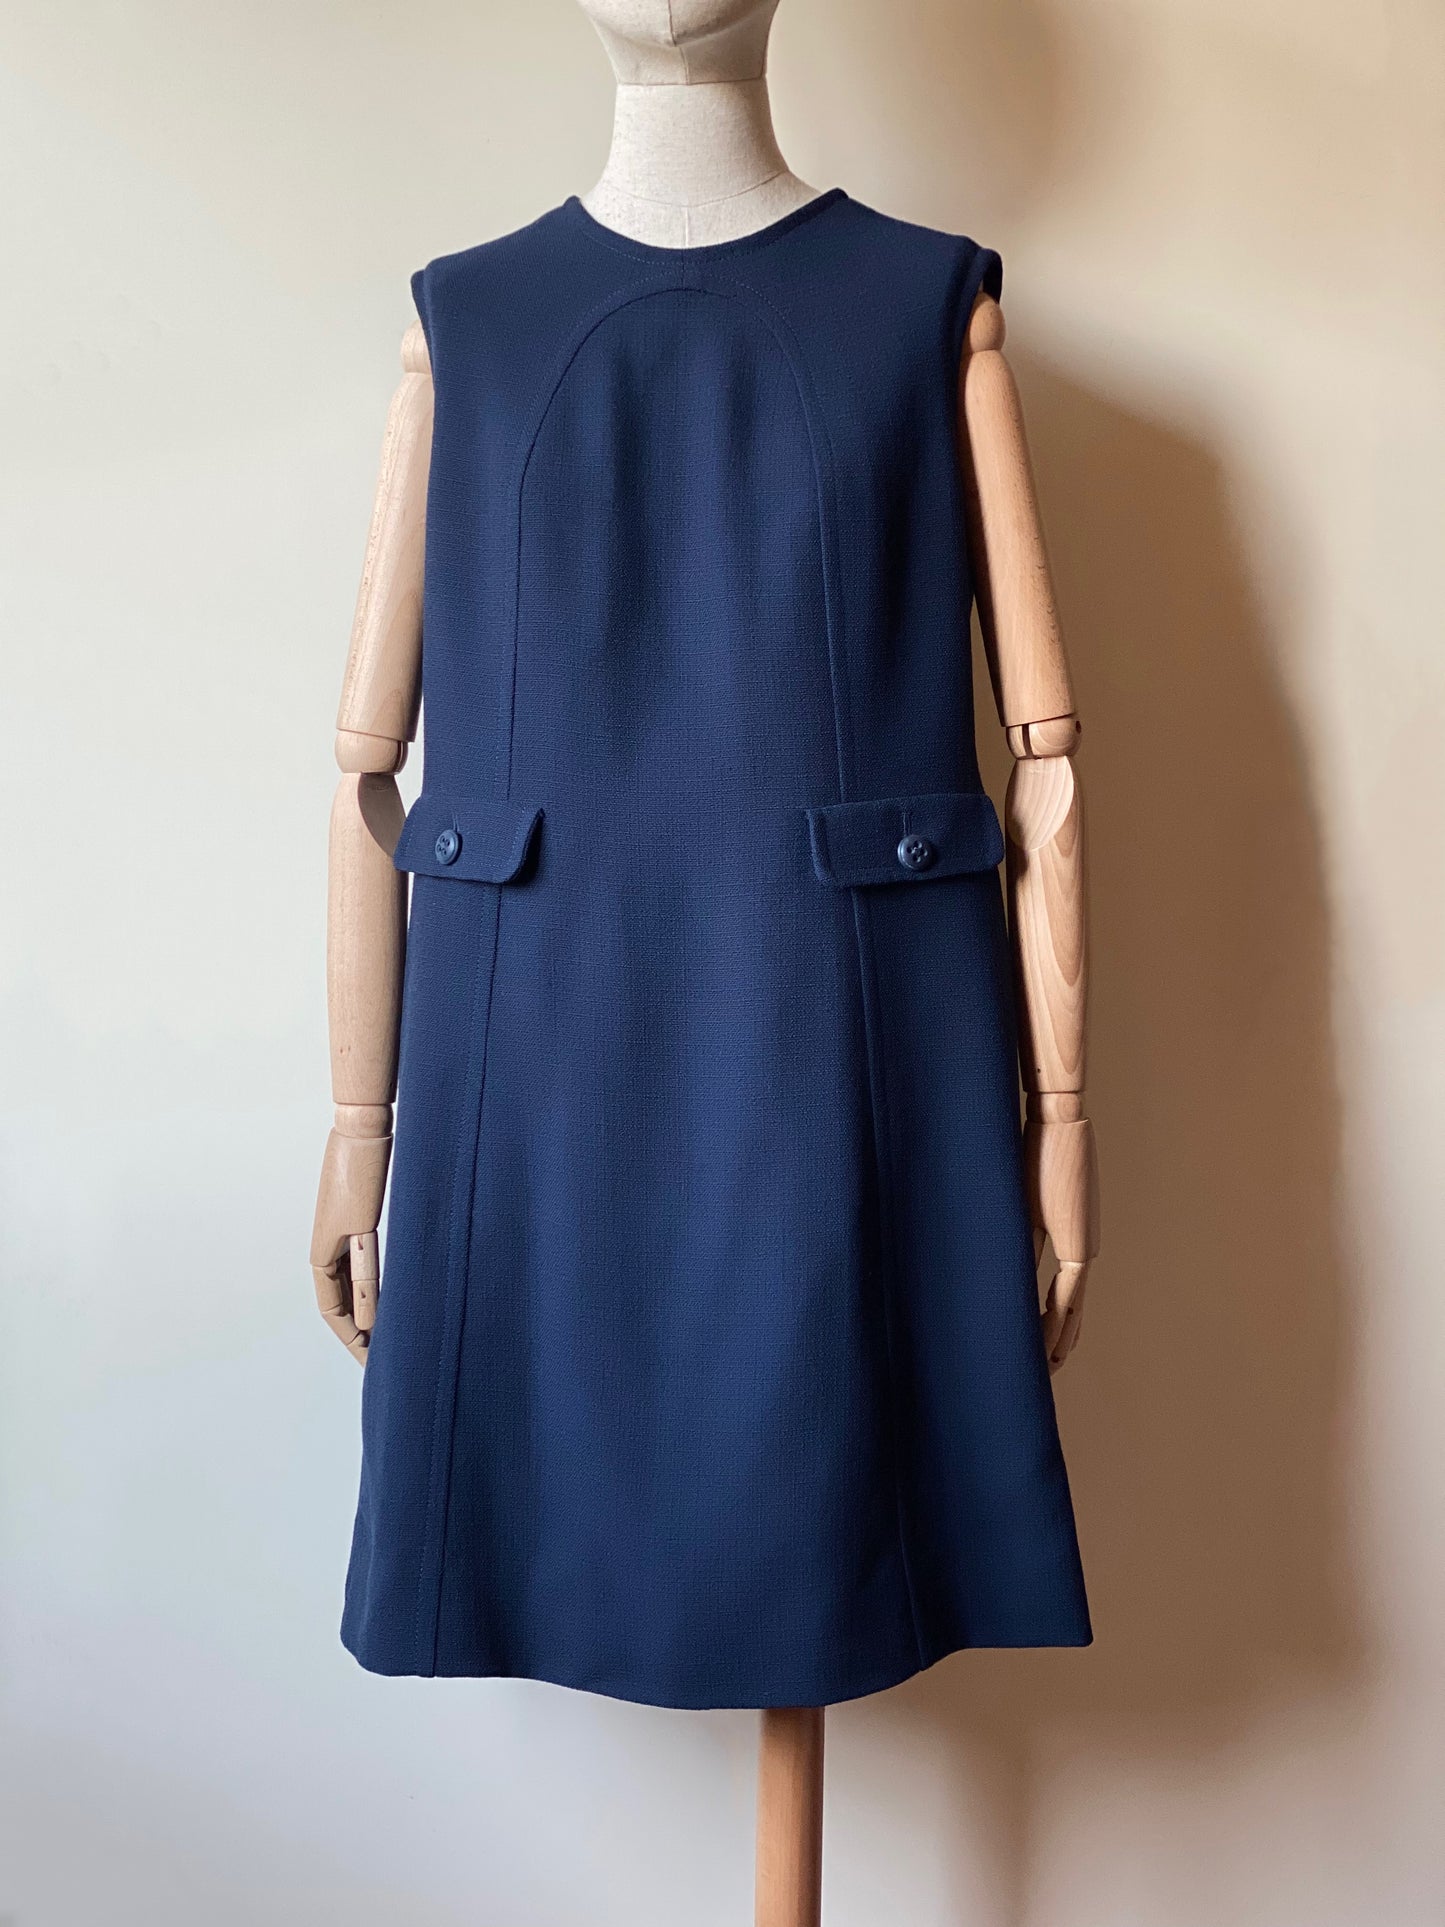 Vintage Dark Blue Sleeveless Dress